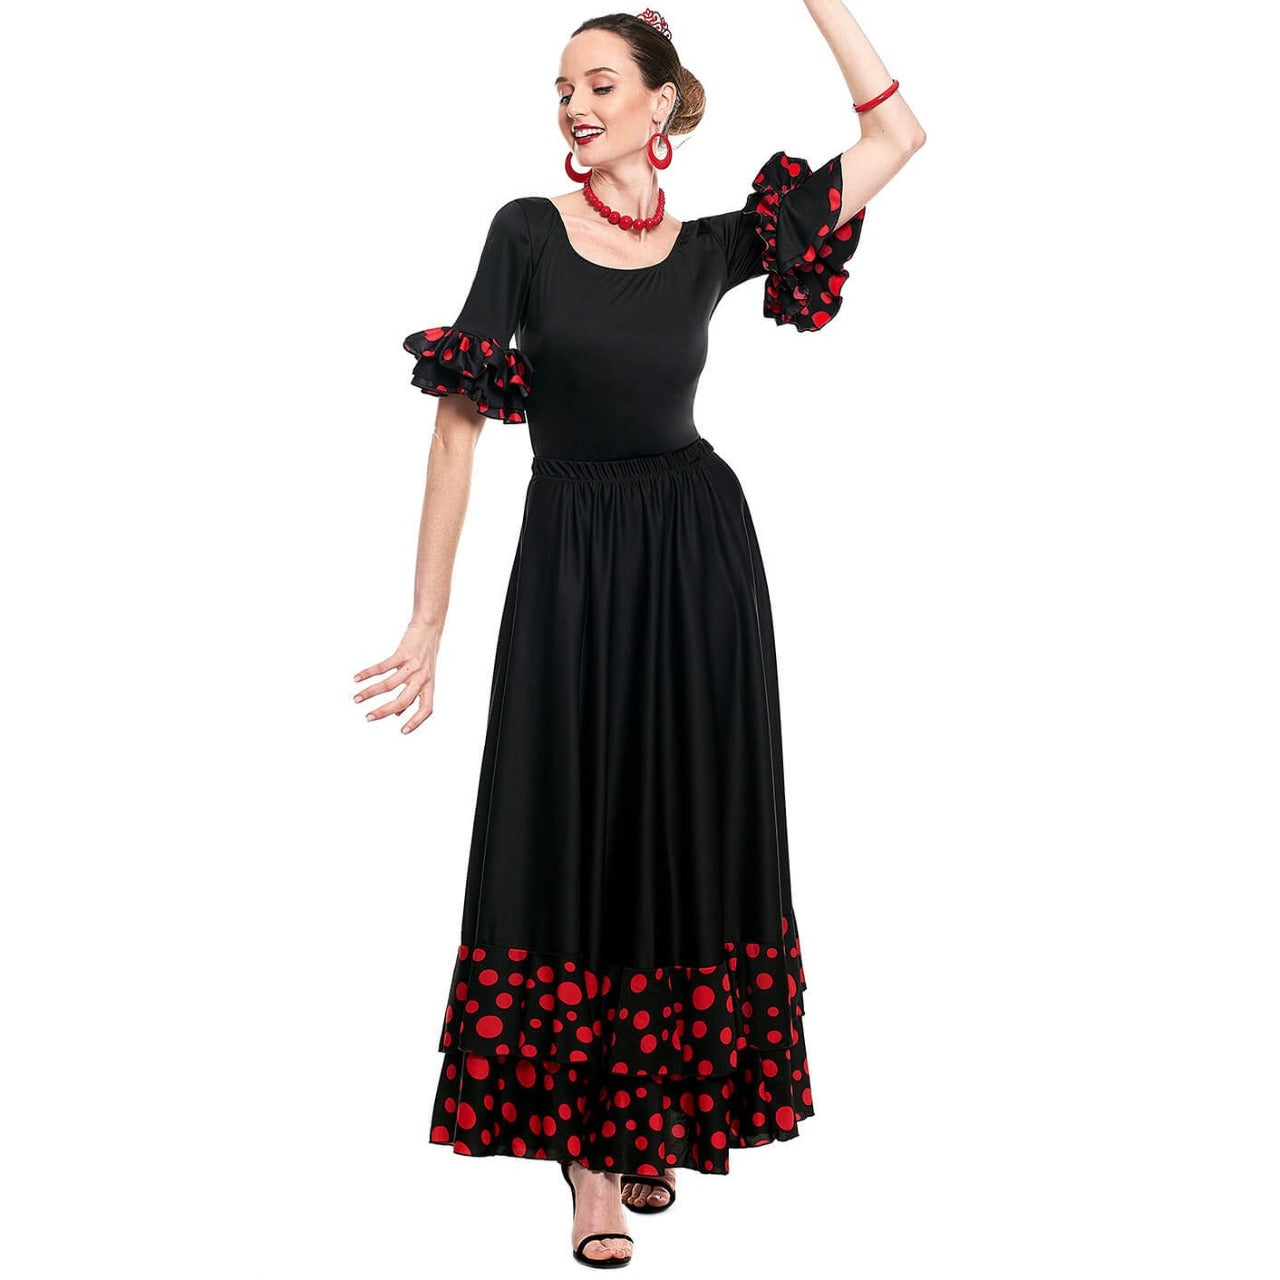 Comprar online Falda de Flamenca Negra